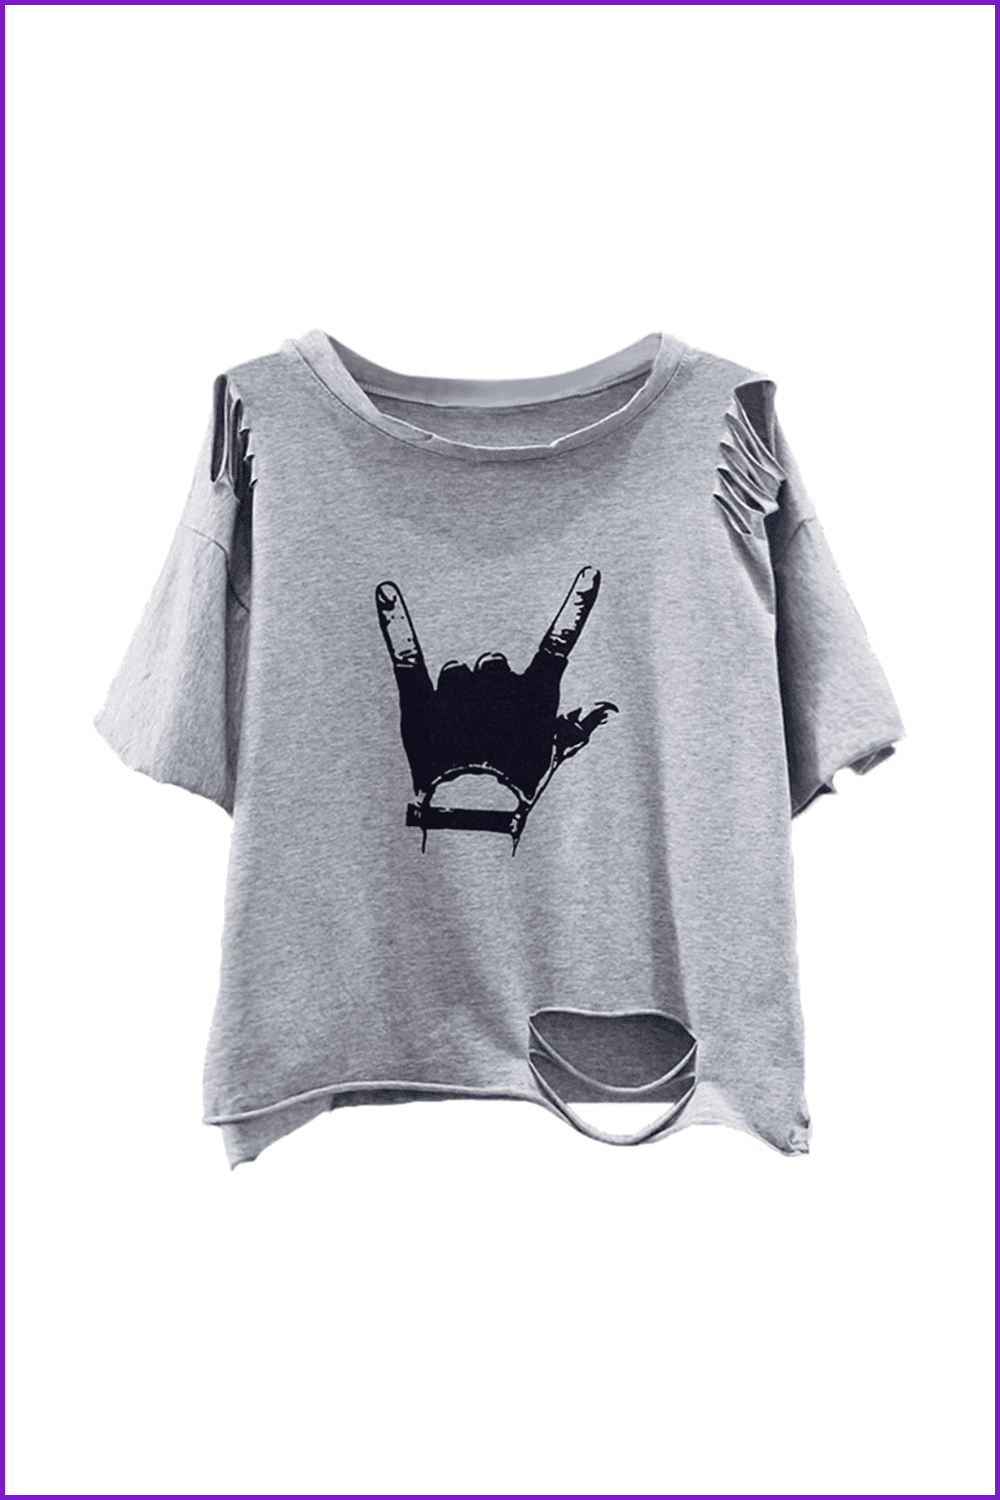 SweatyRocks Women’s Short Sleeve T Shirt Graphic Print Distressed Crop Top.